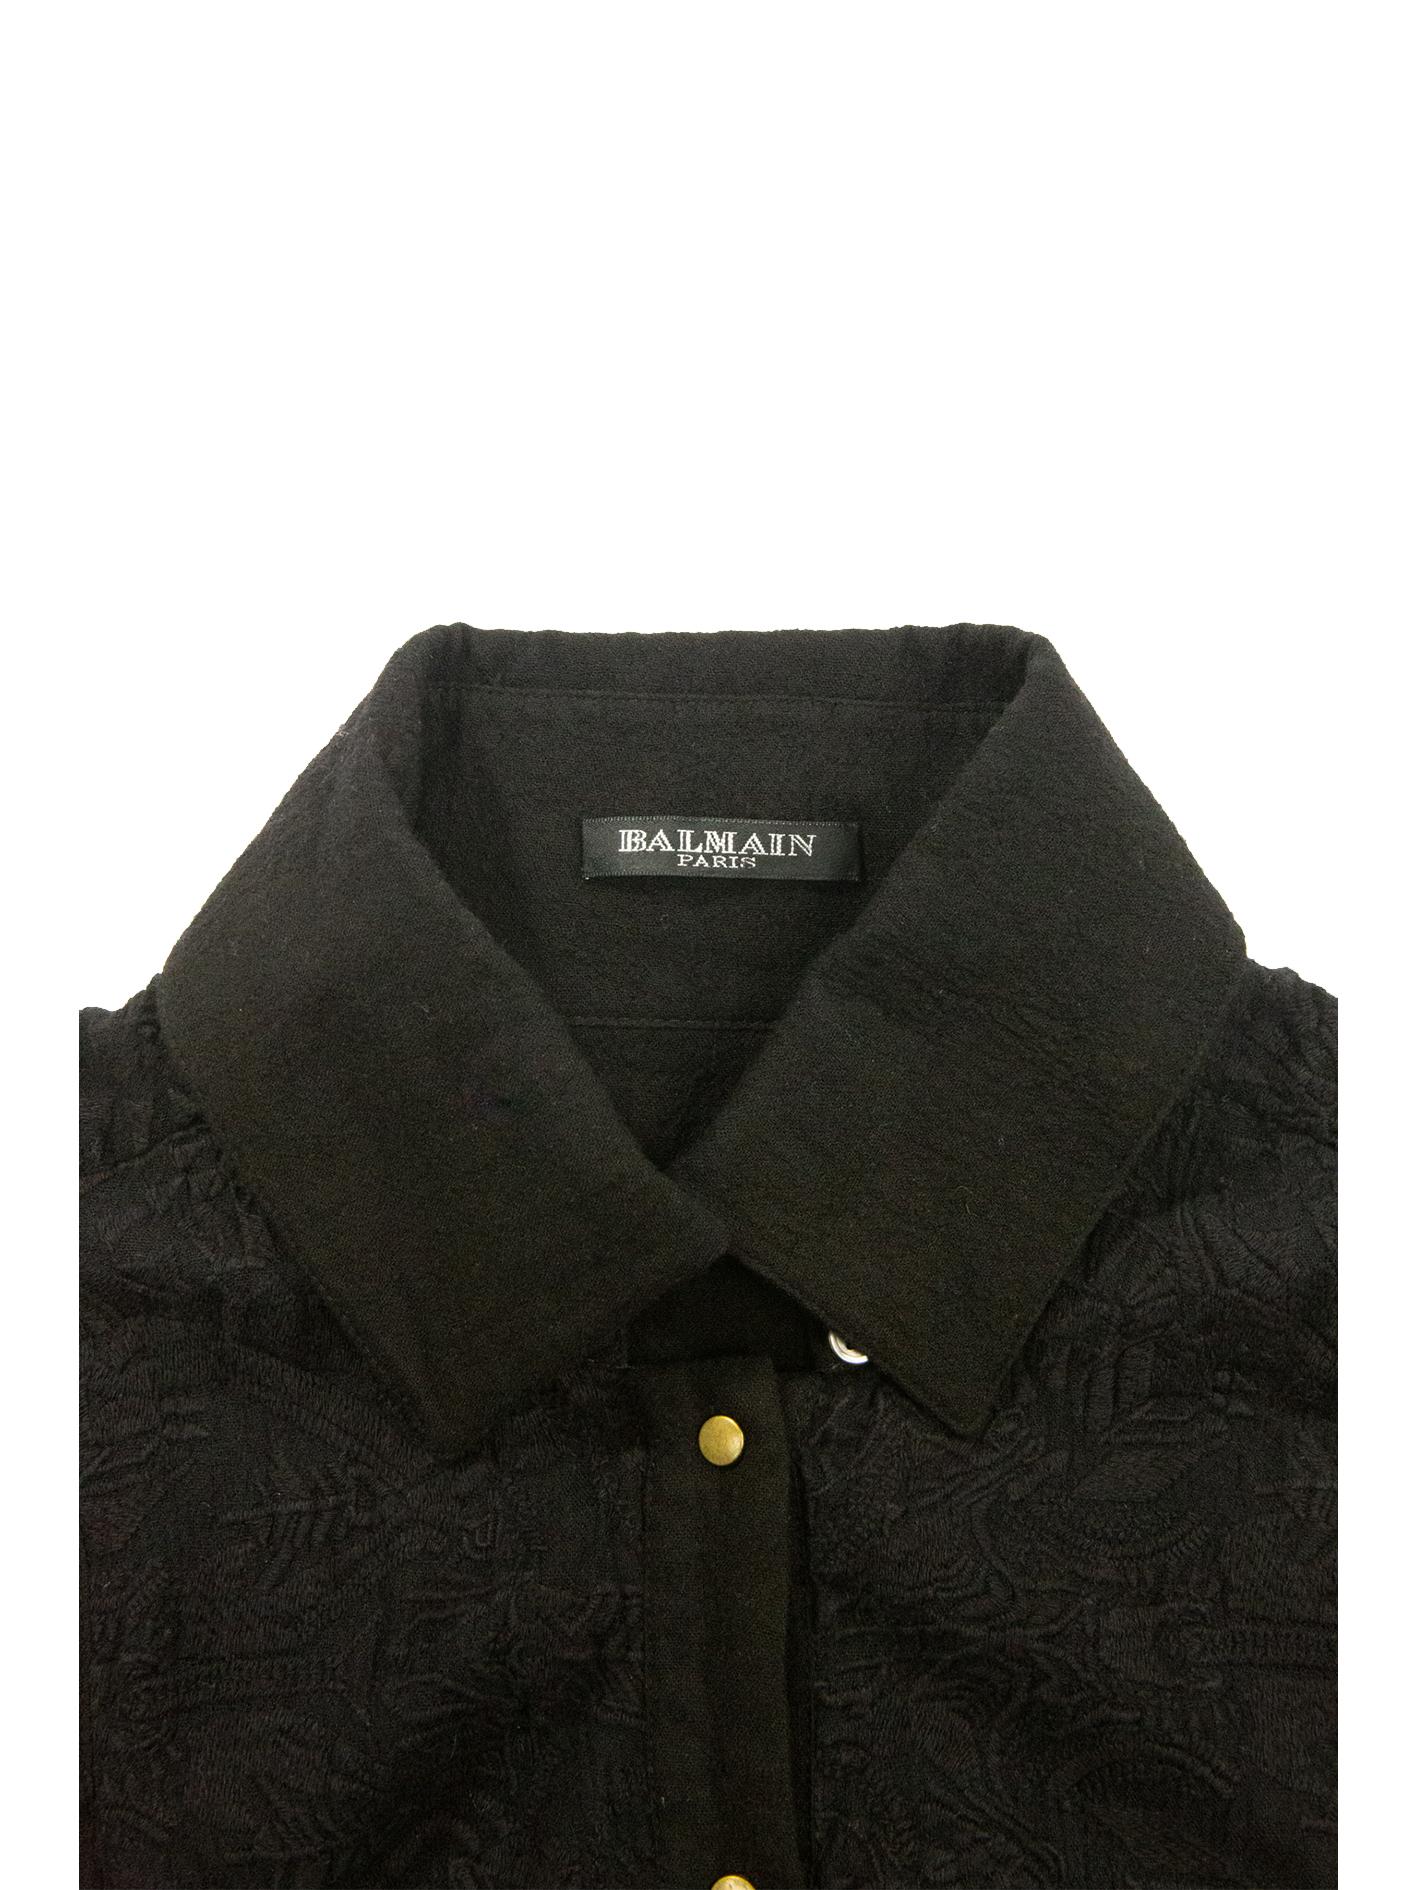 Balmain Black Shirt With Brass Detail For Sale 3